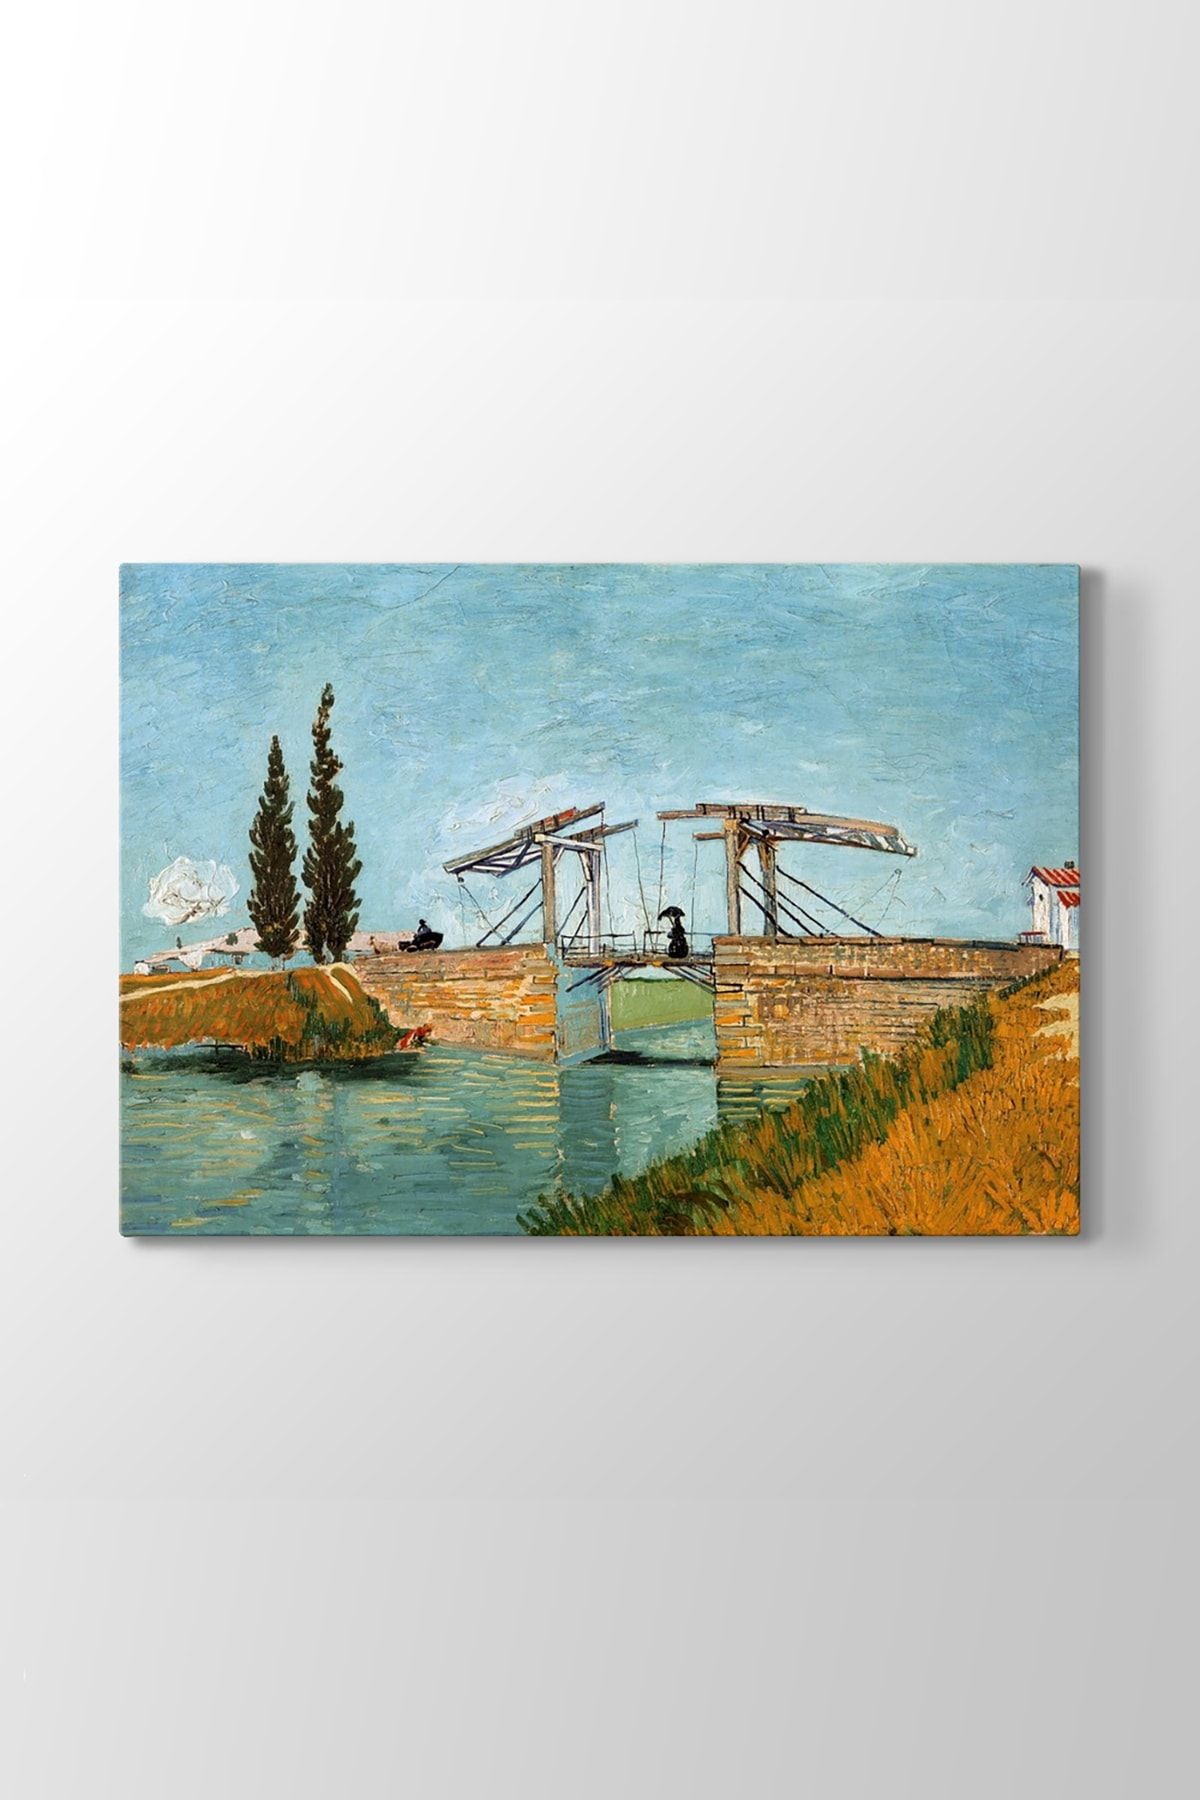 TabloShop Vincent Van Gogh - Arles Köprüsü Tablosu (Model 1) - (ÖLÇÜSÜ 75x50 cm)